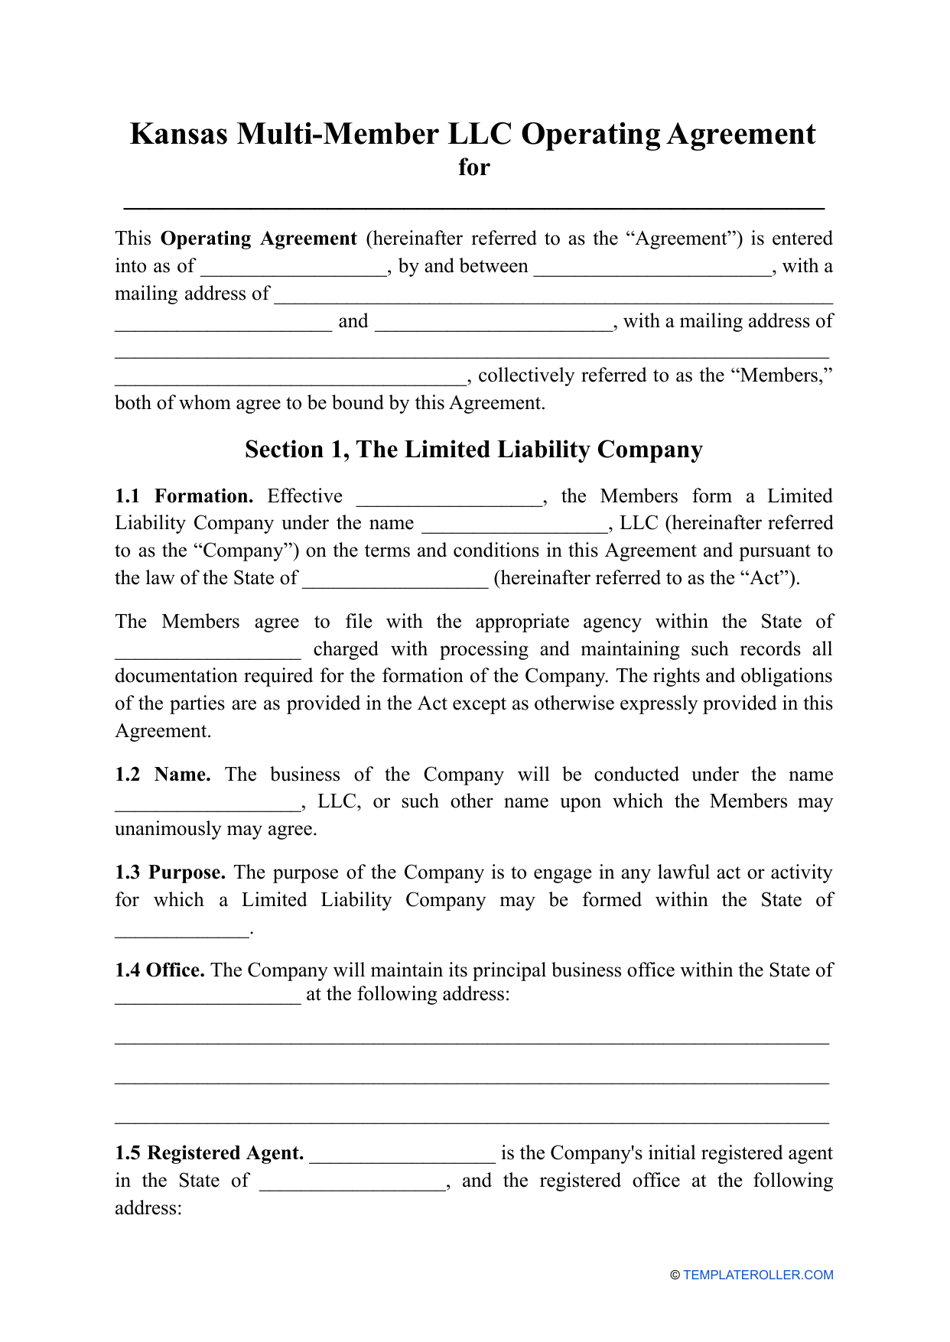 Multi-Member LLC Operating Agreement Template - Kansas, Page 1